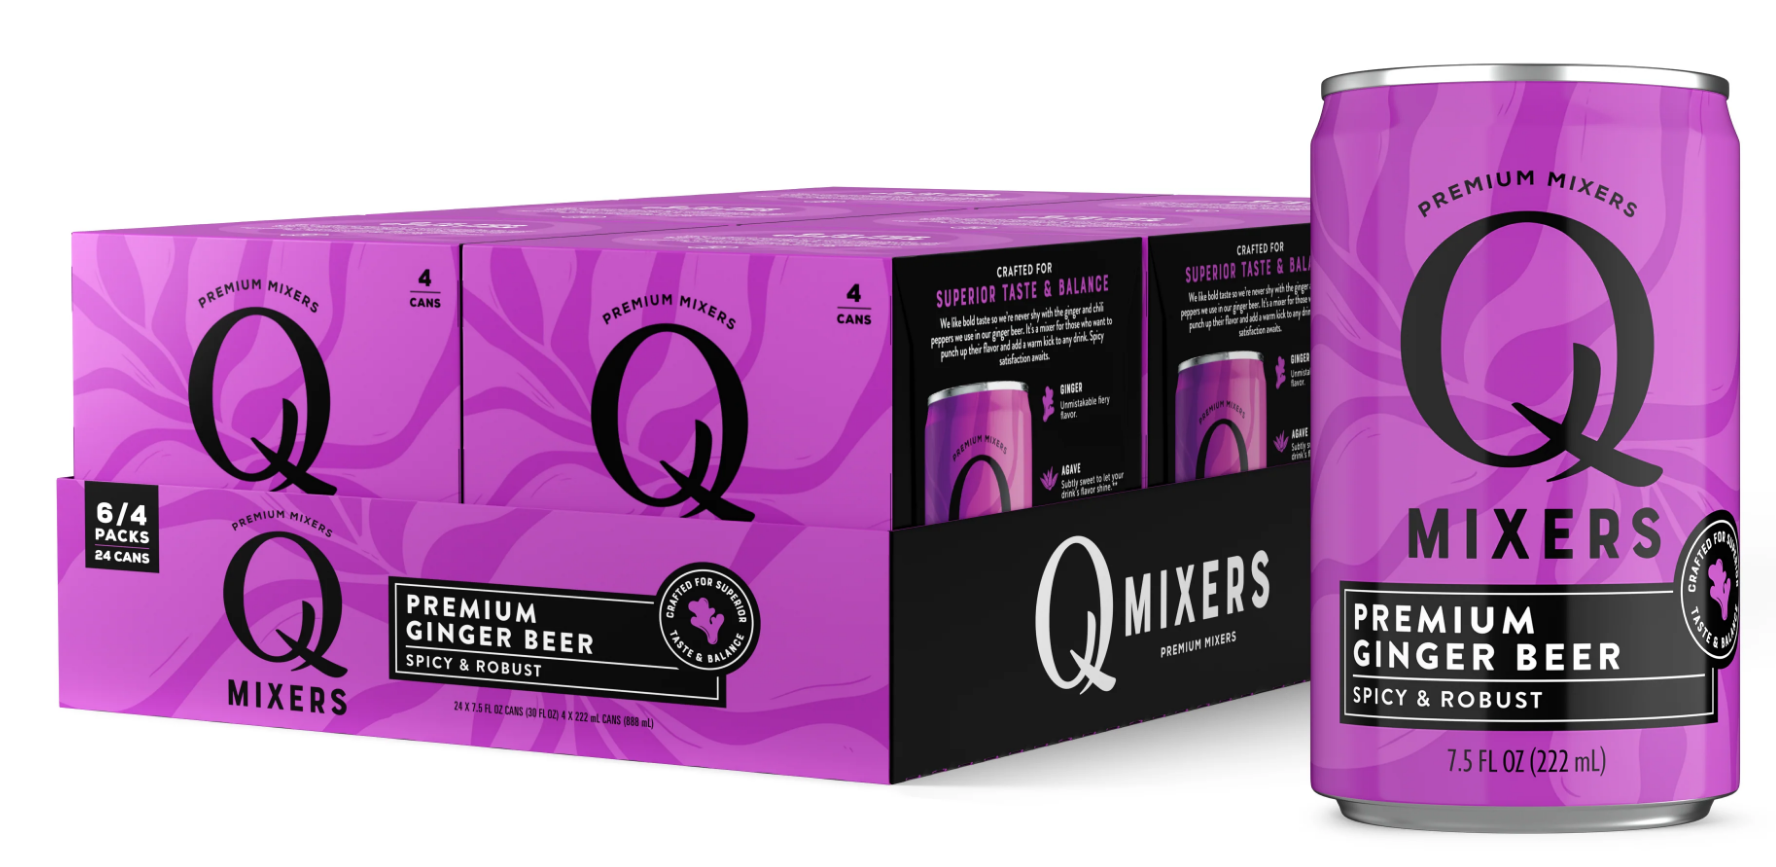 Q Mixers, America's Leading Premium Mixers Brand, Expands into Non